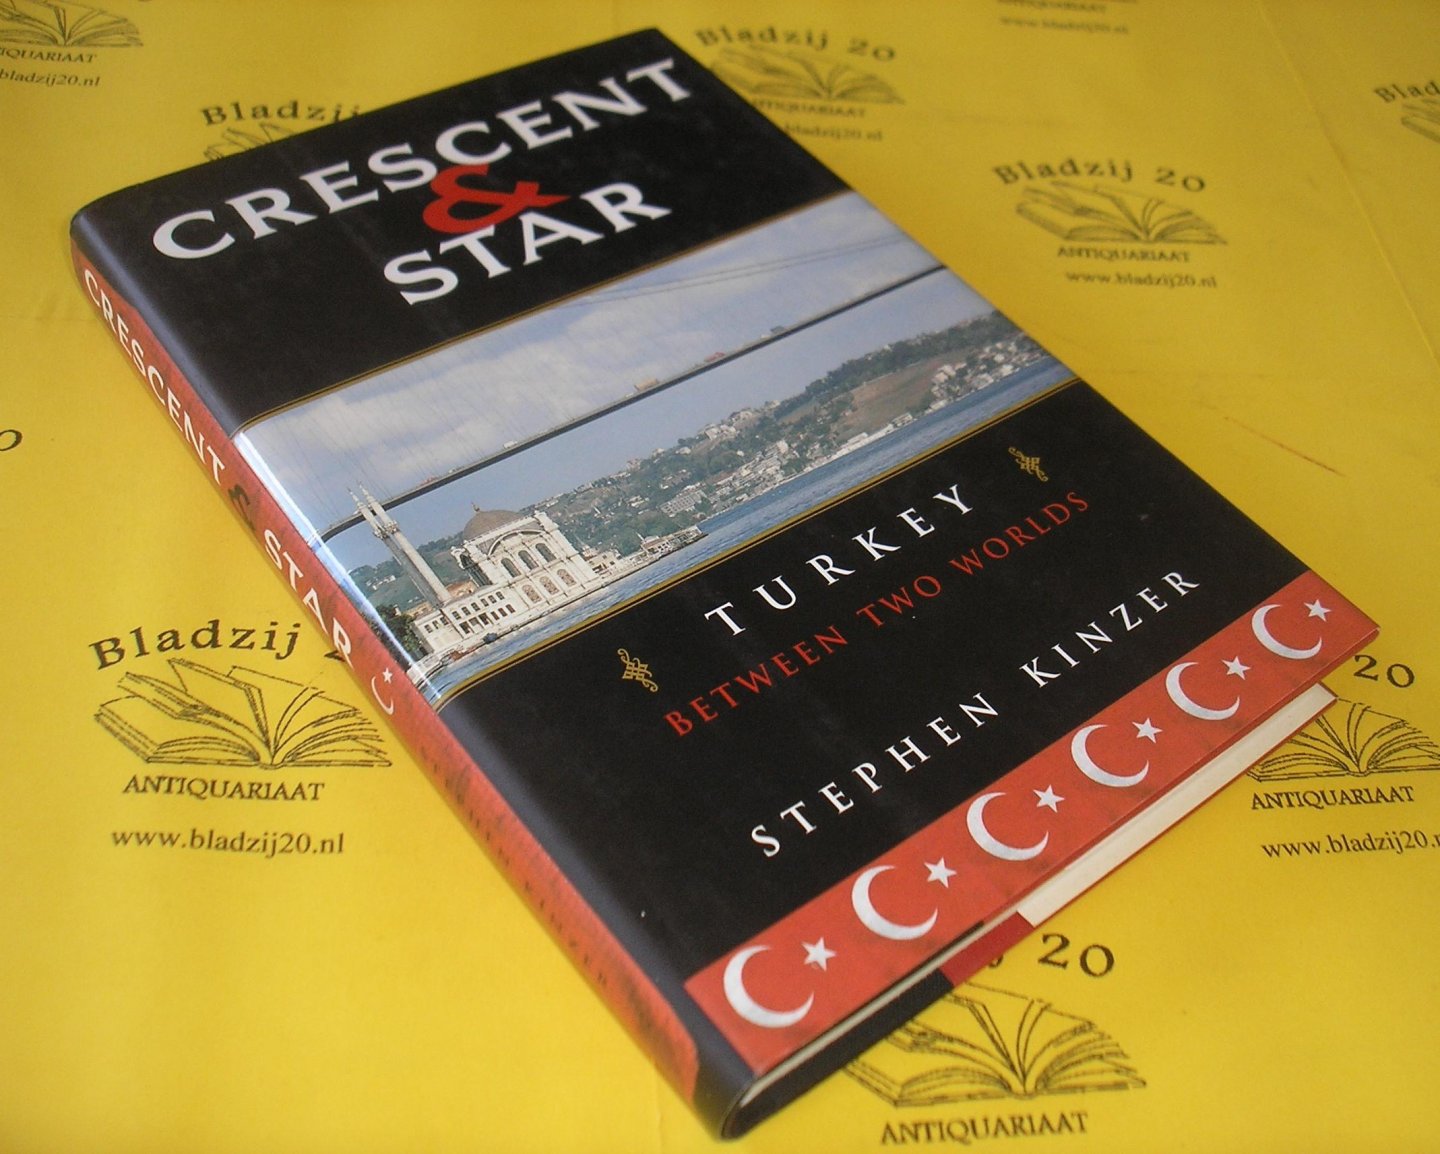 Kinzer, Stephen. - Crescent and Star. Turkey between two worlds.